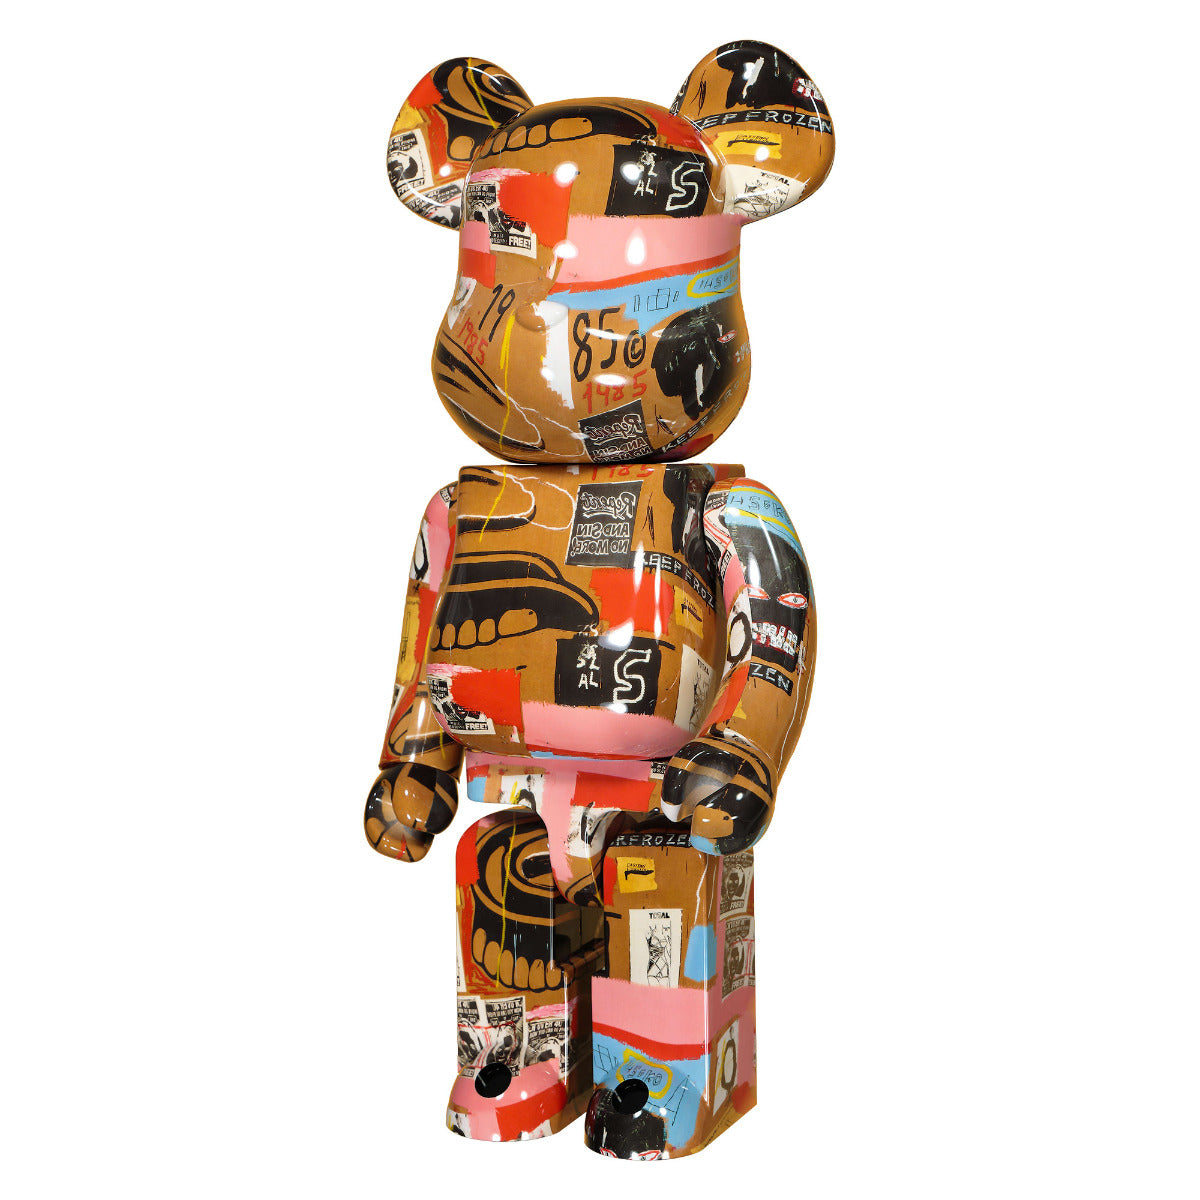 Medicom Toy - 1000% Bearbrick Andy Warhol X Jean-Michel Basquiat